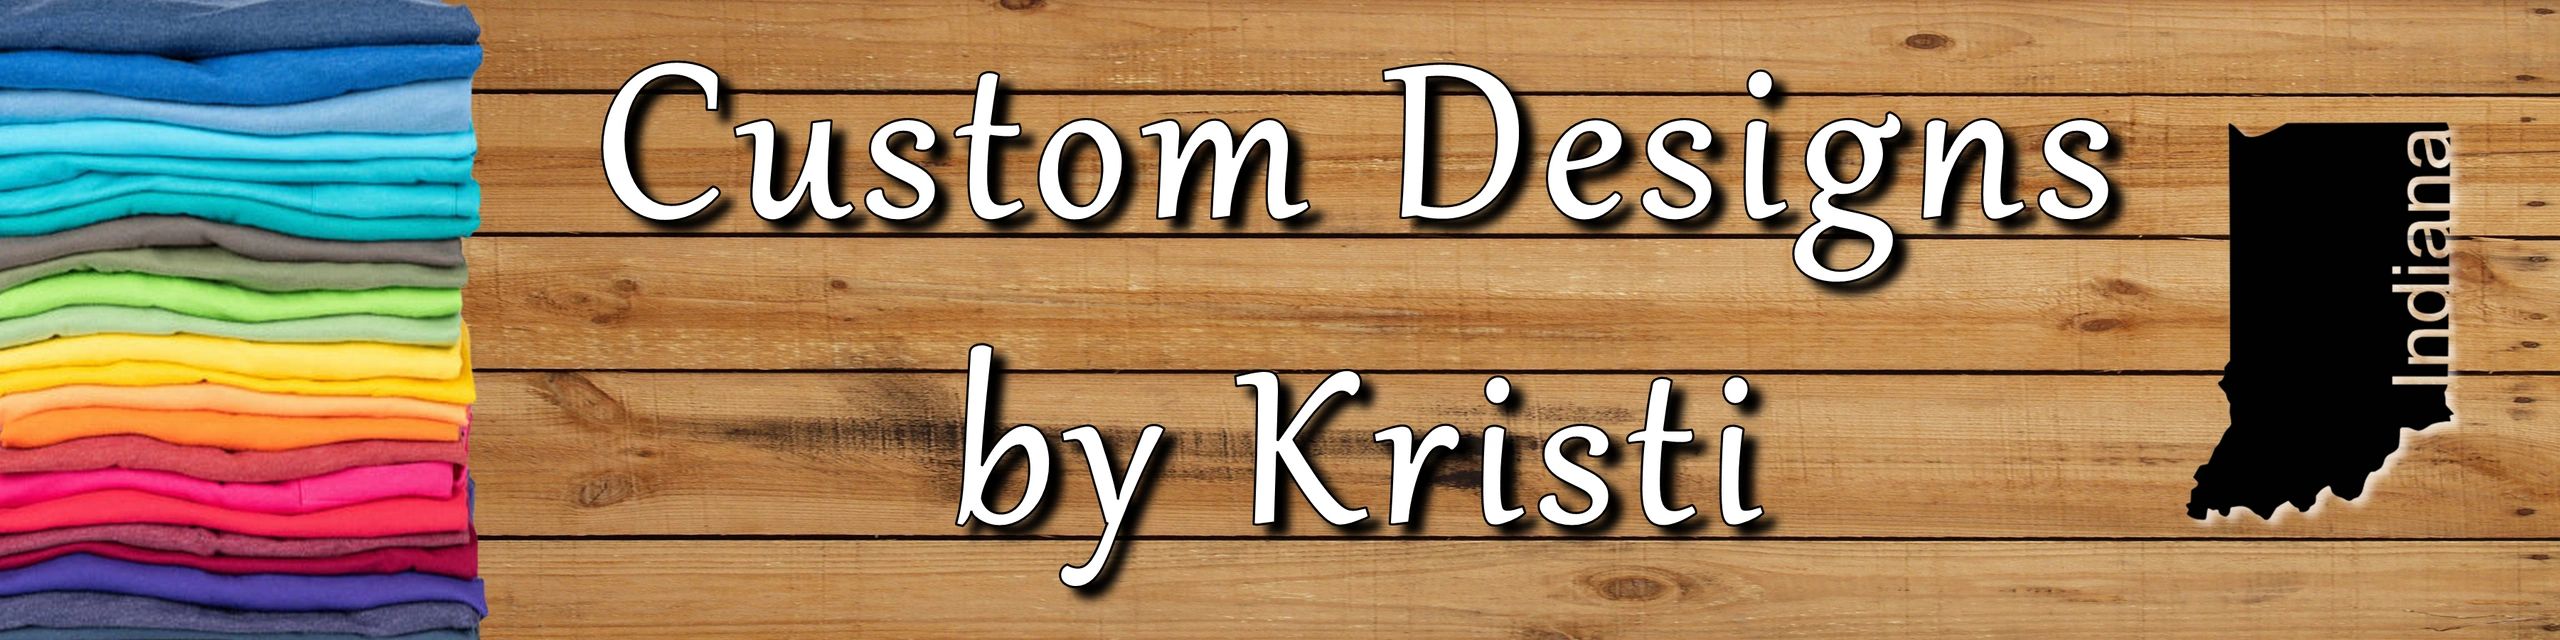 Custom Designs by Kristi